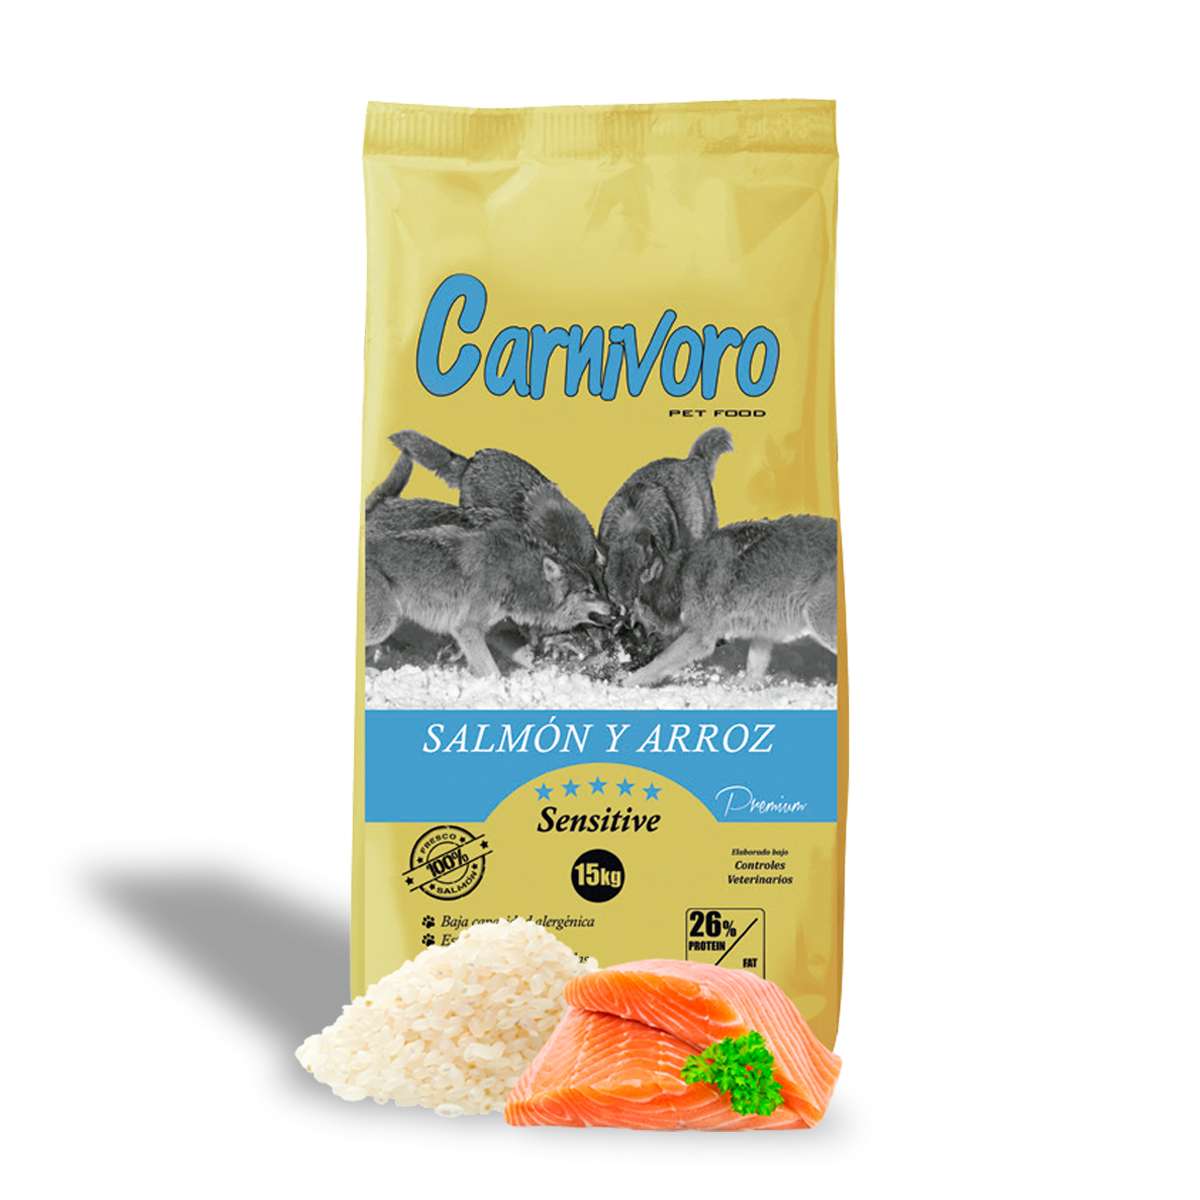 carnivoro salmon y arroz (sensitive)